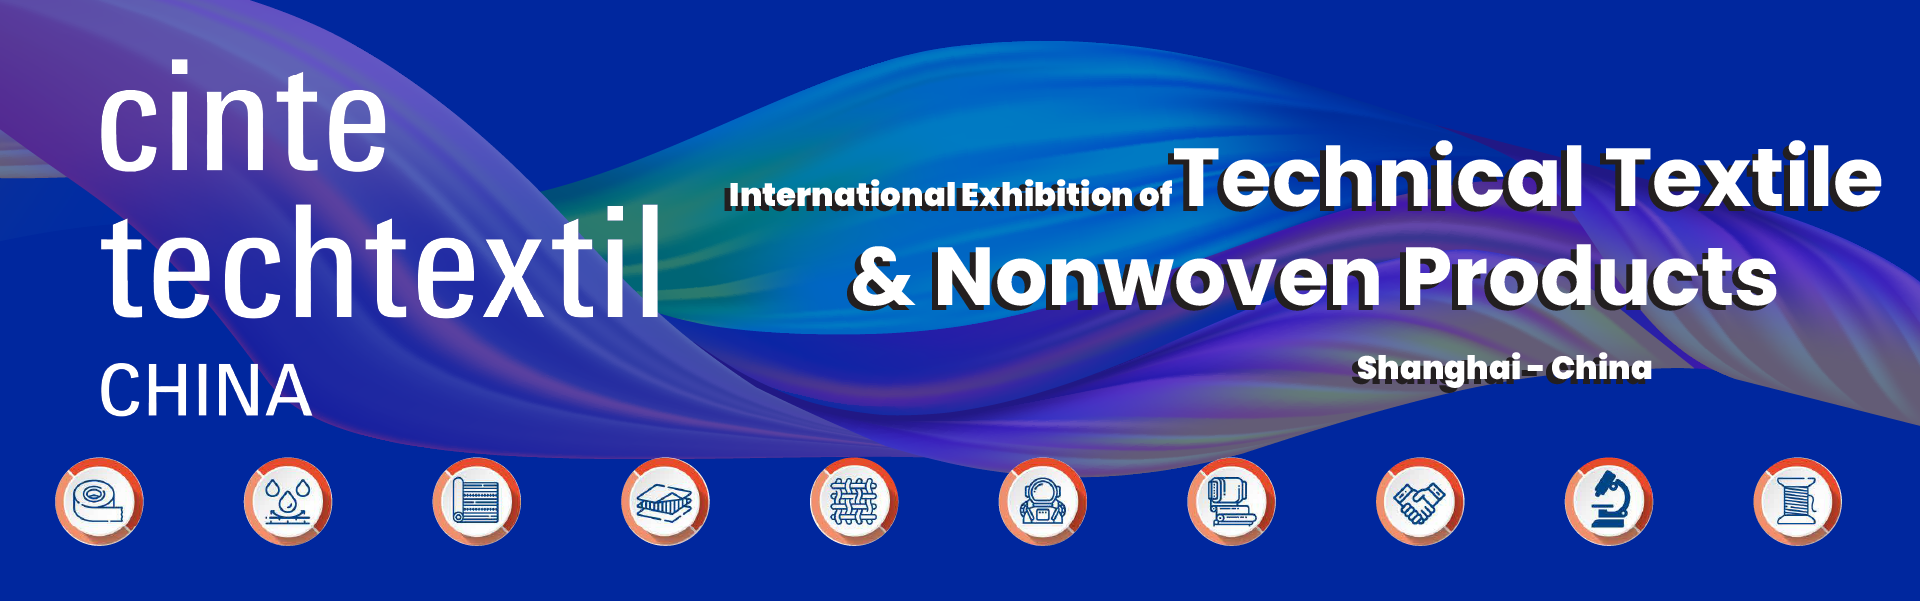 Shanghai International Exhibition of Cinte Techtextil